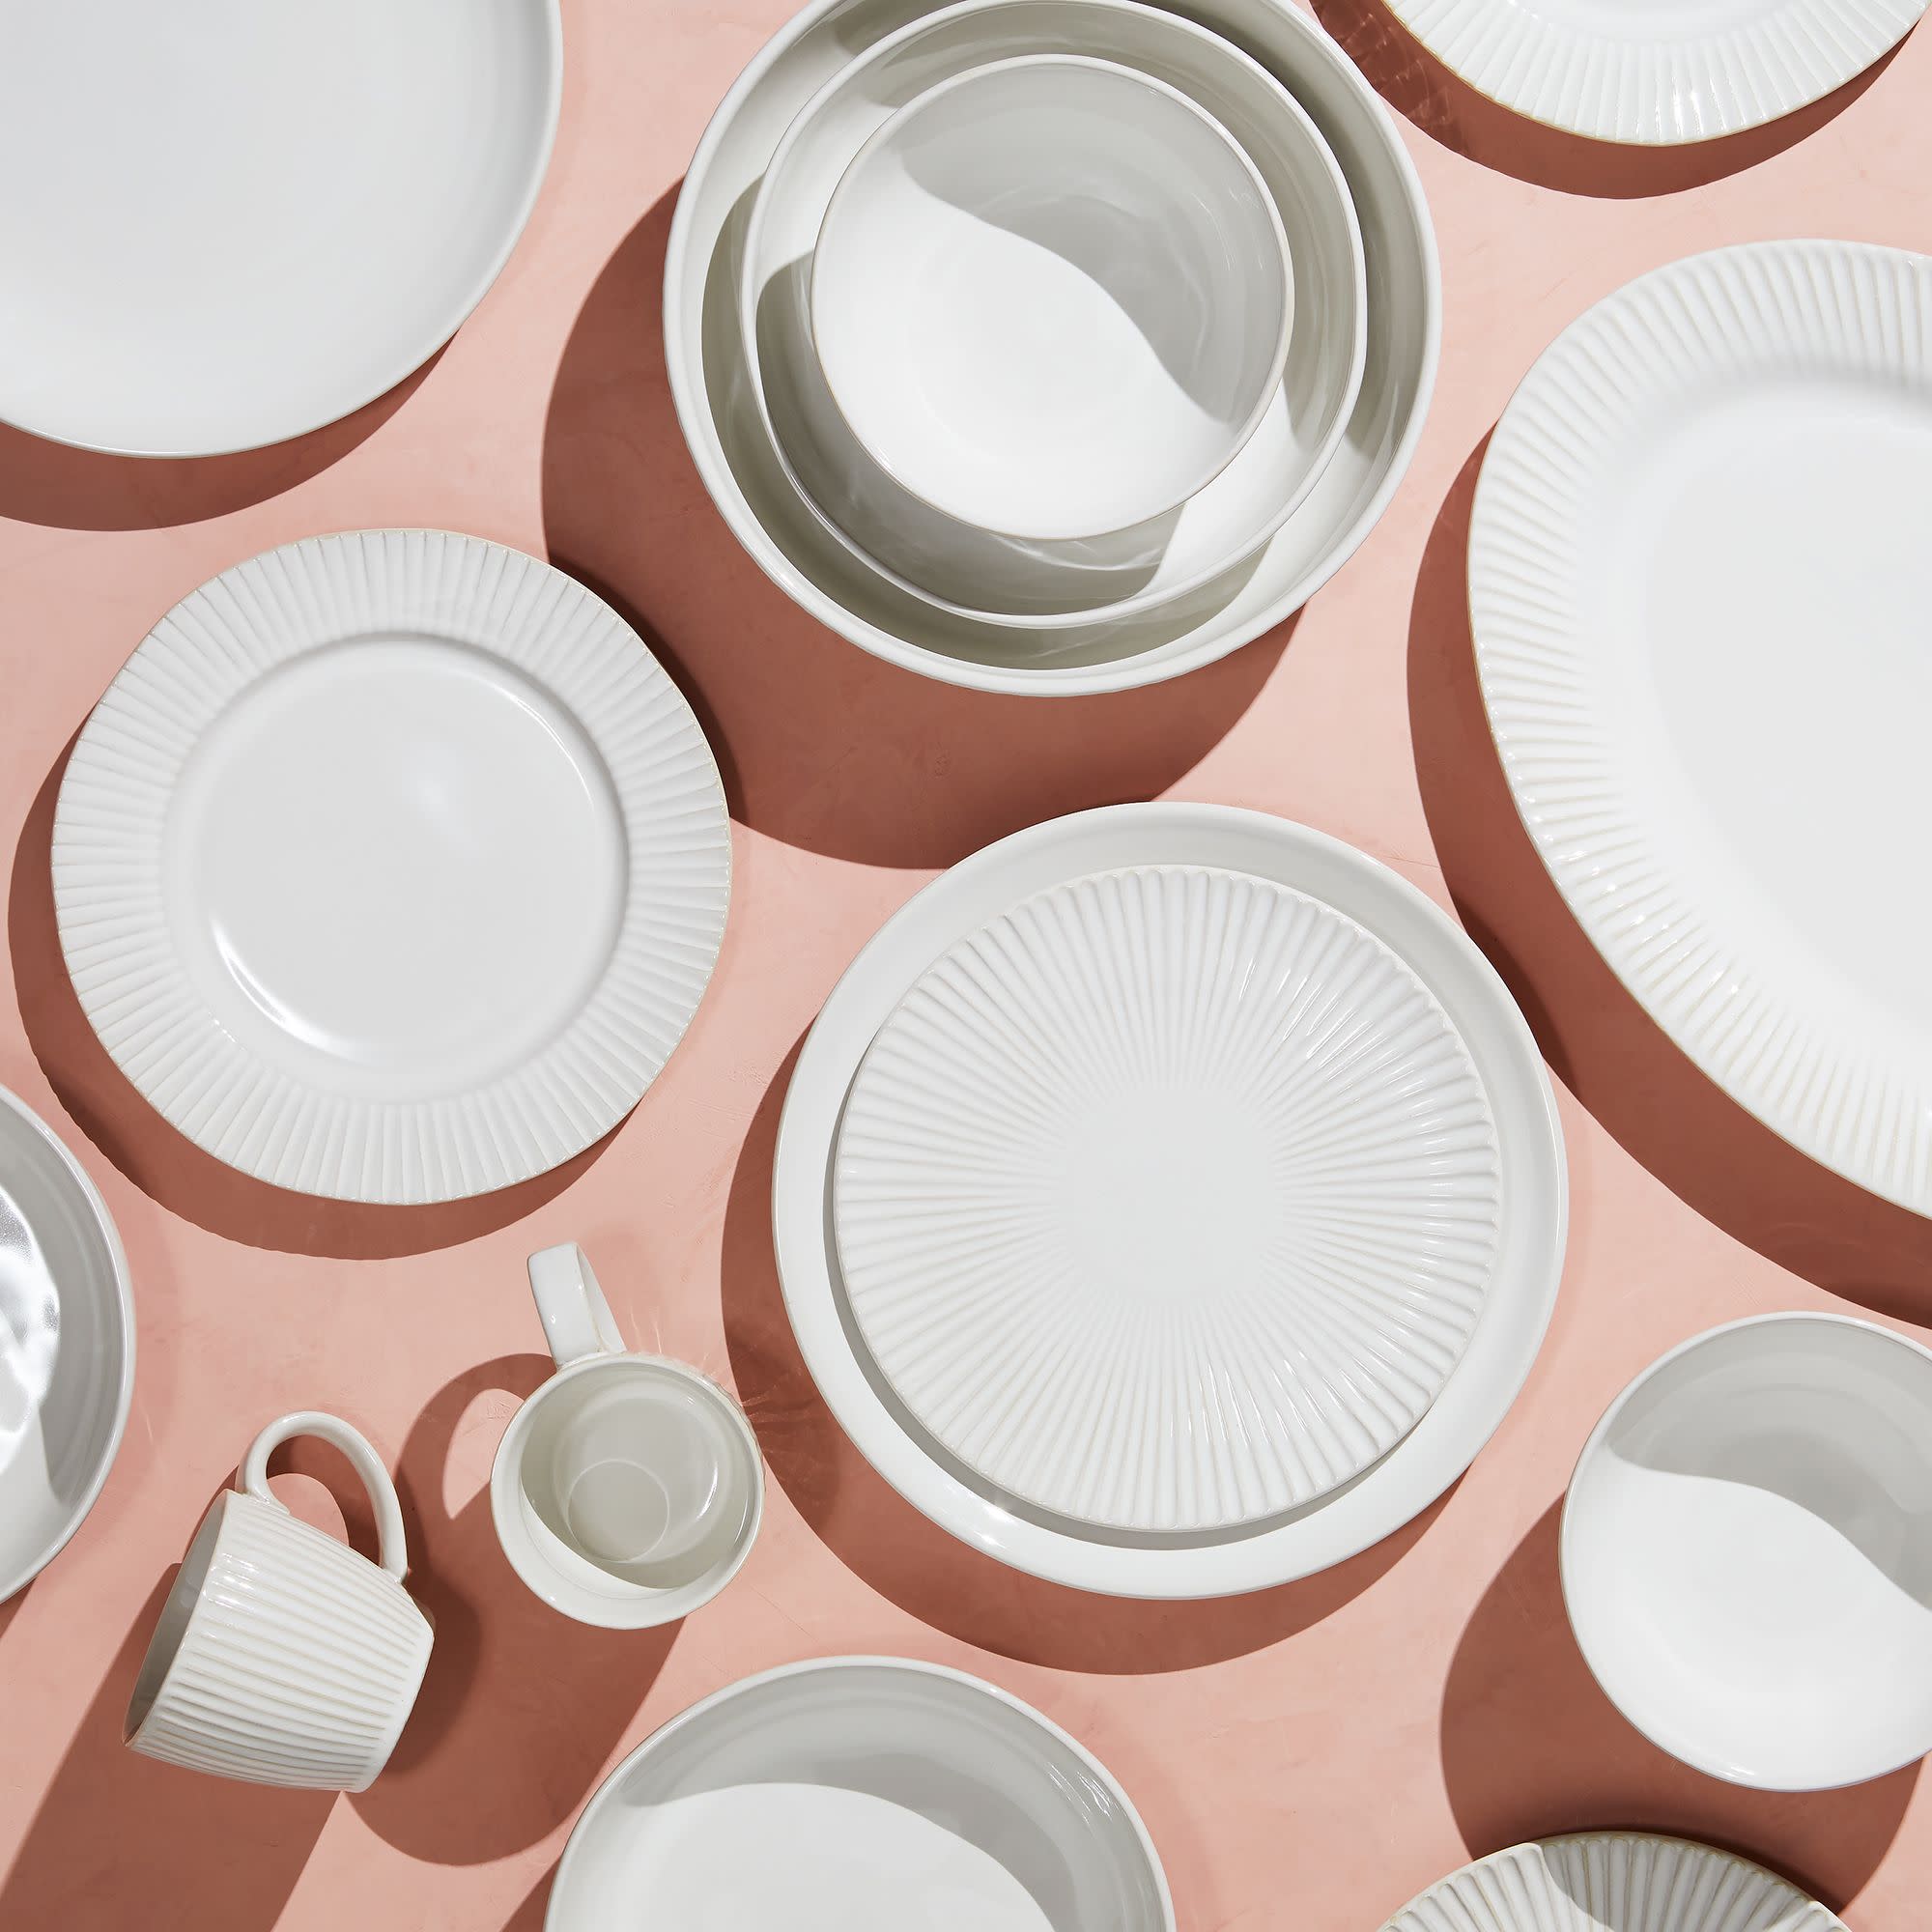 Avie 24 Or 12 Piece Dinner Service Set Kitchen Porcelain Plates Bowls Dishes New 